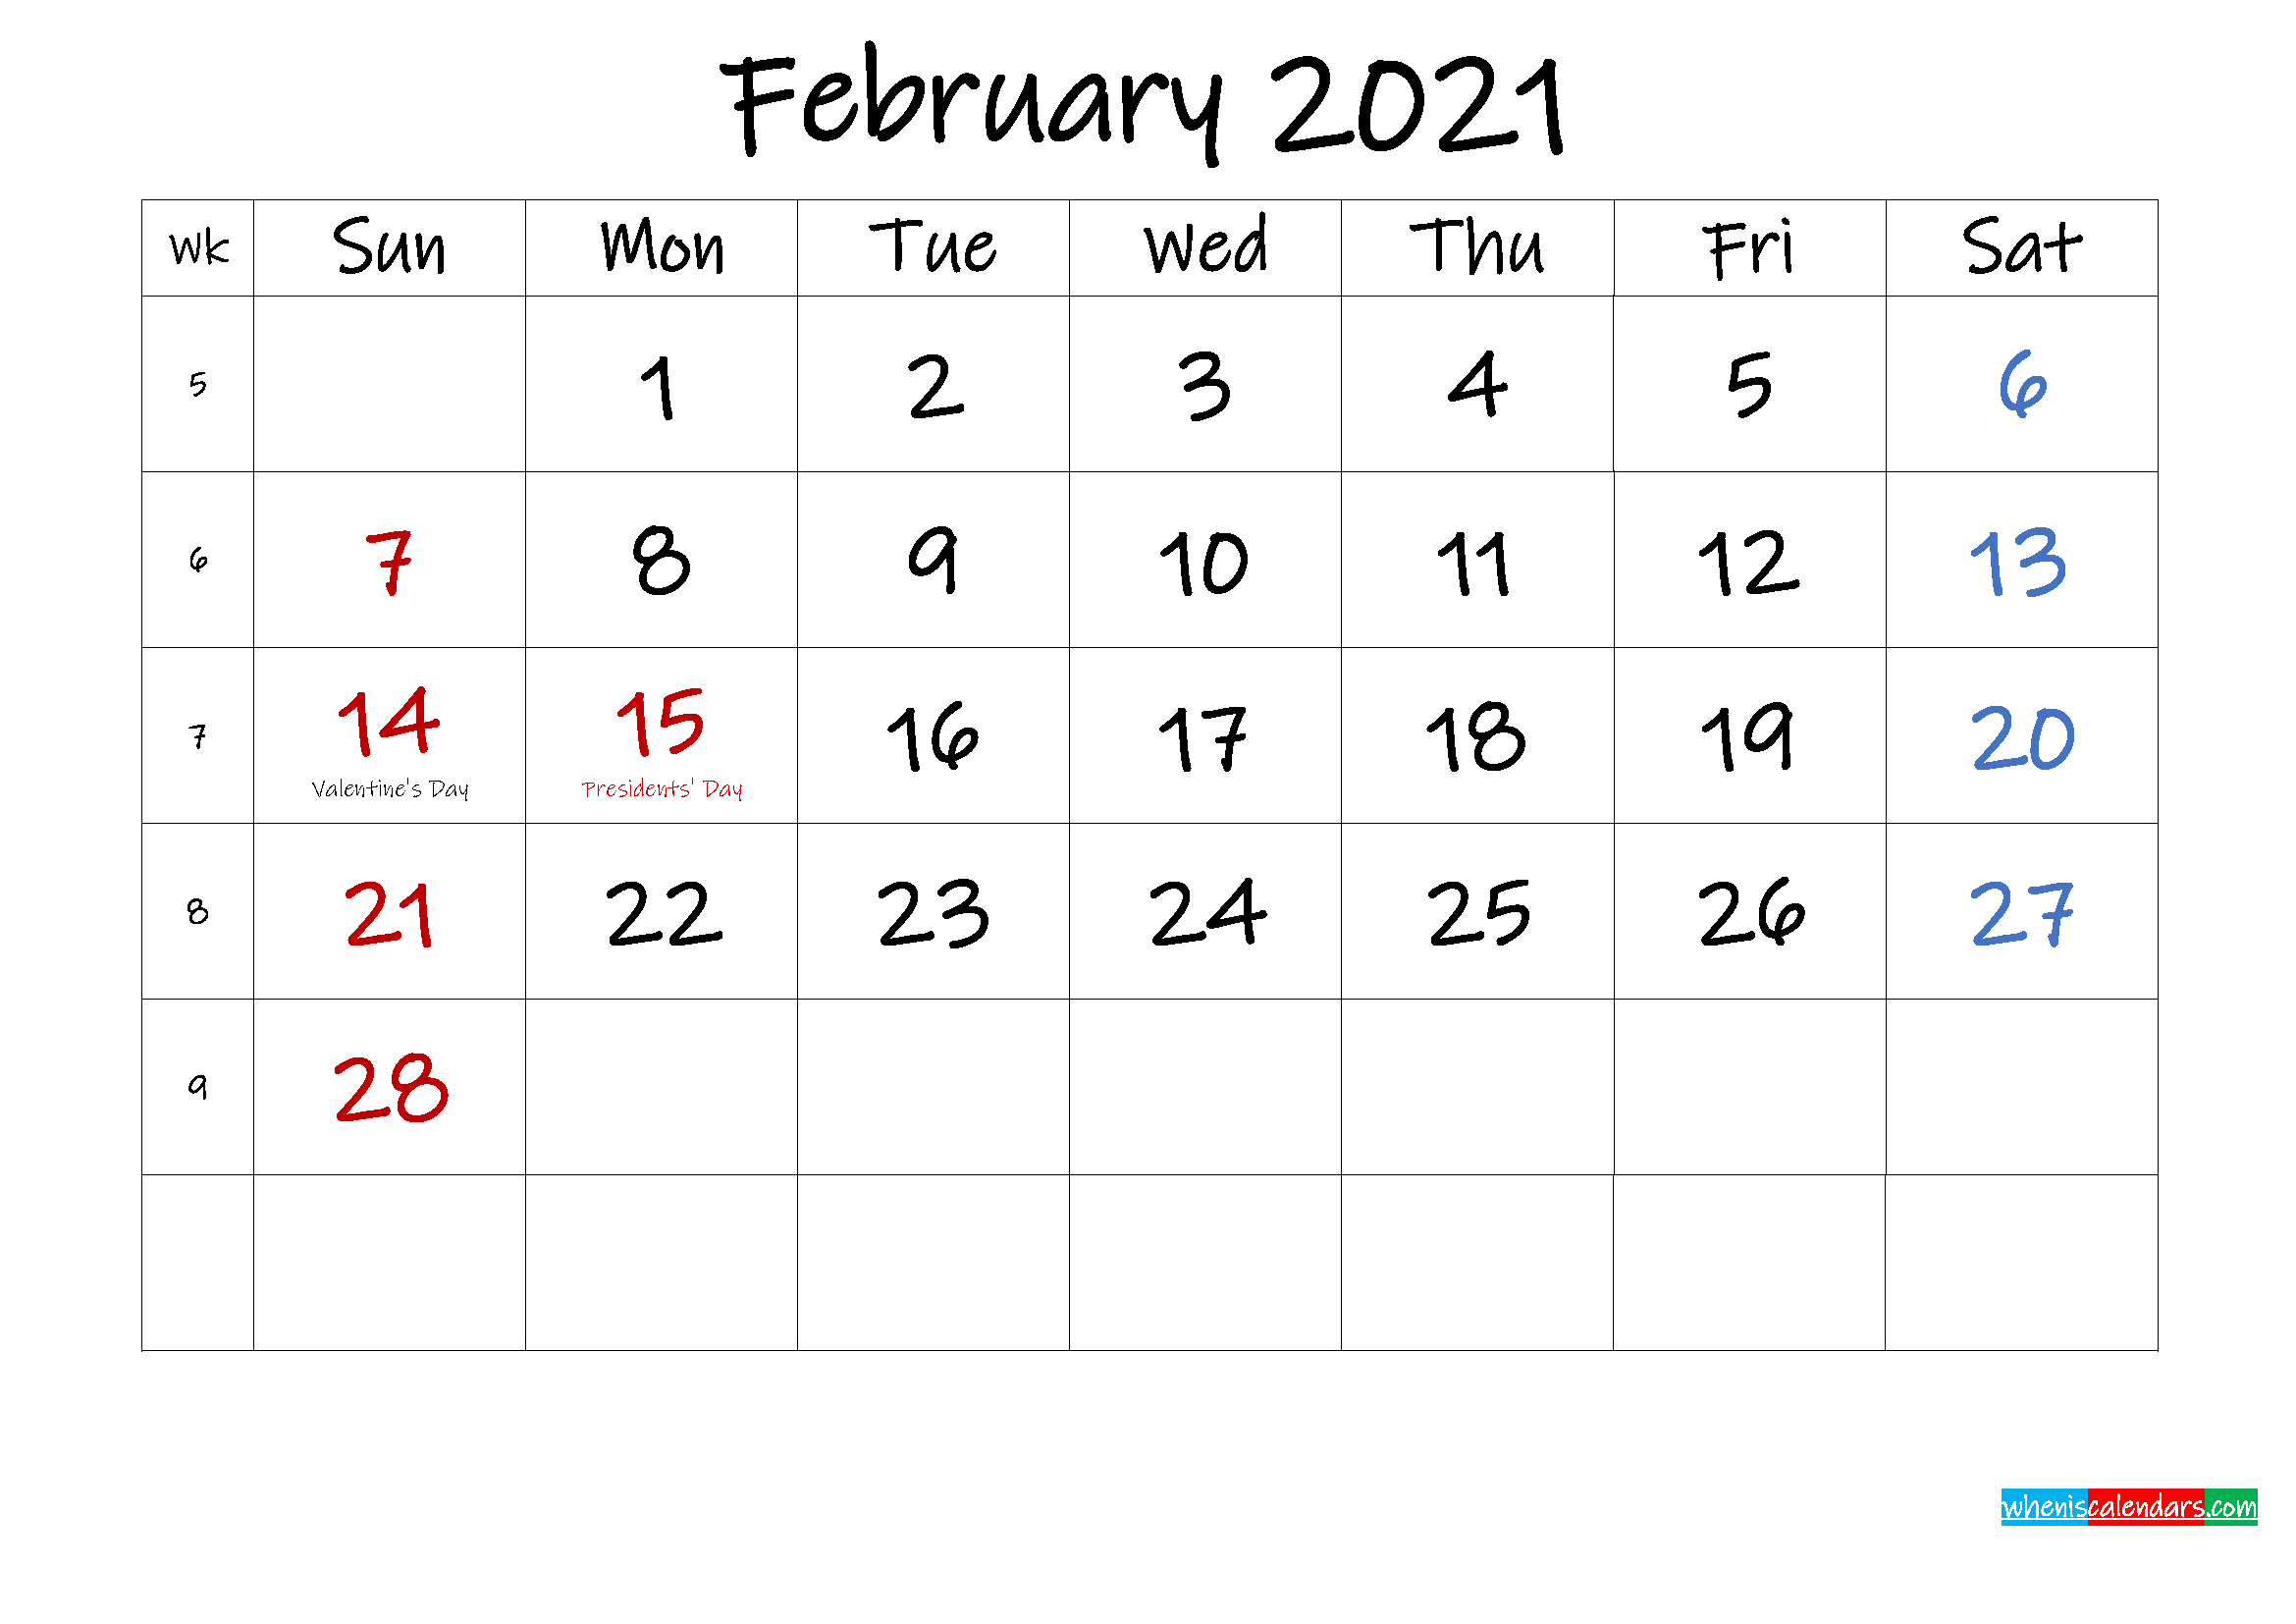 30 Free February 2021 Calendars For Home Or Office Onedesblog 2019 calendar psd, png, template. 30 free february 2021 calendars for